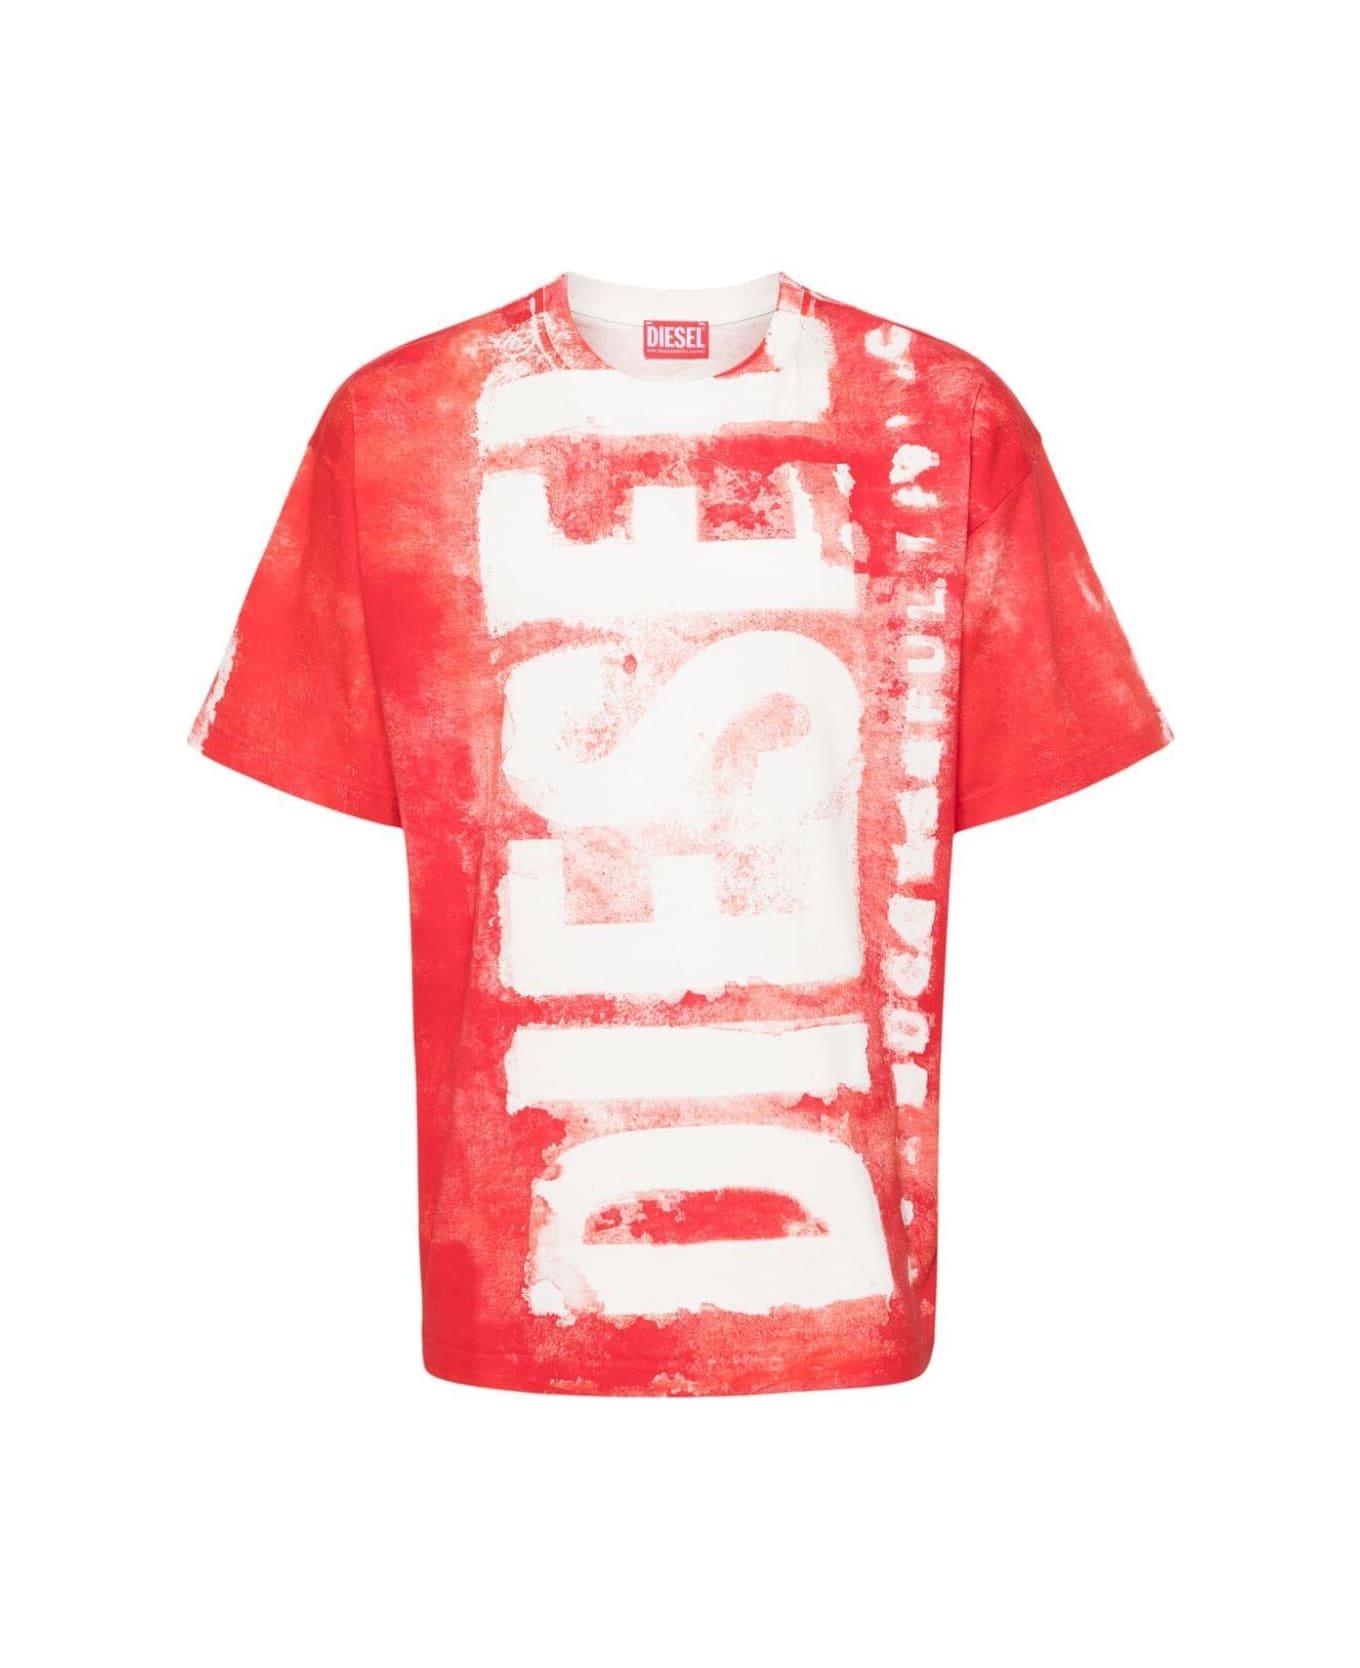 Diesel Bosxt Bisc T-shirt - Aa Red Multi